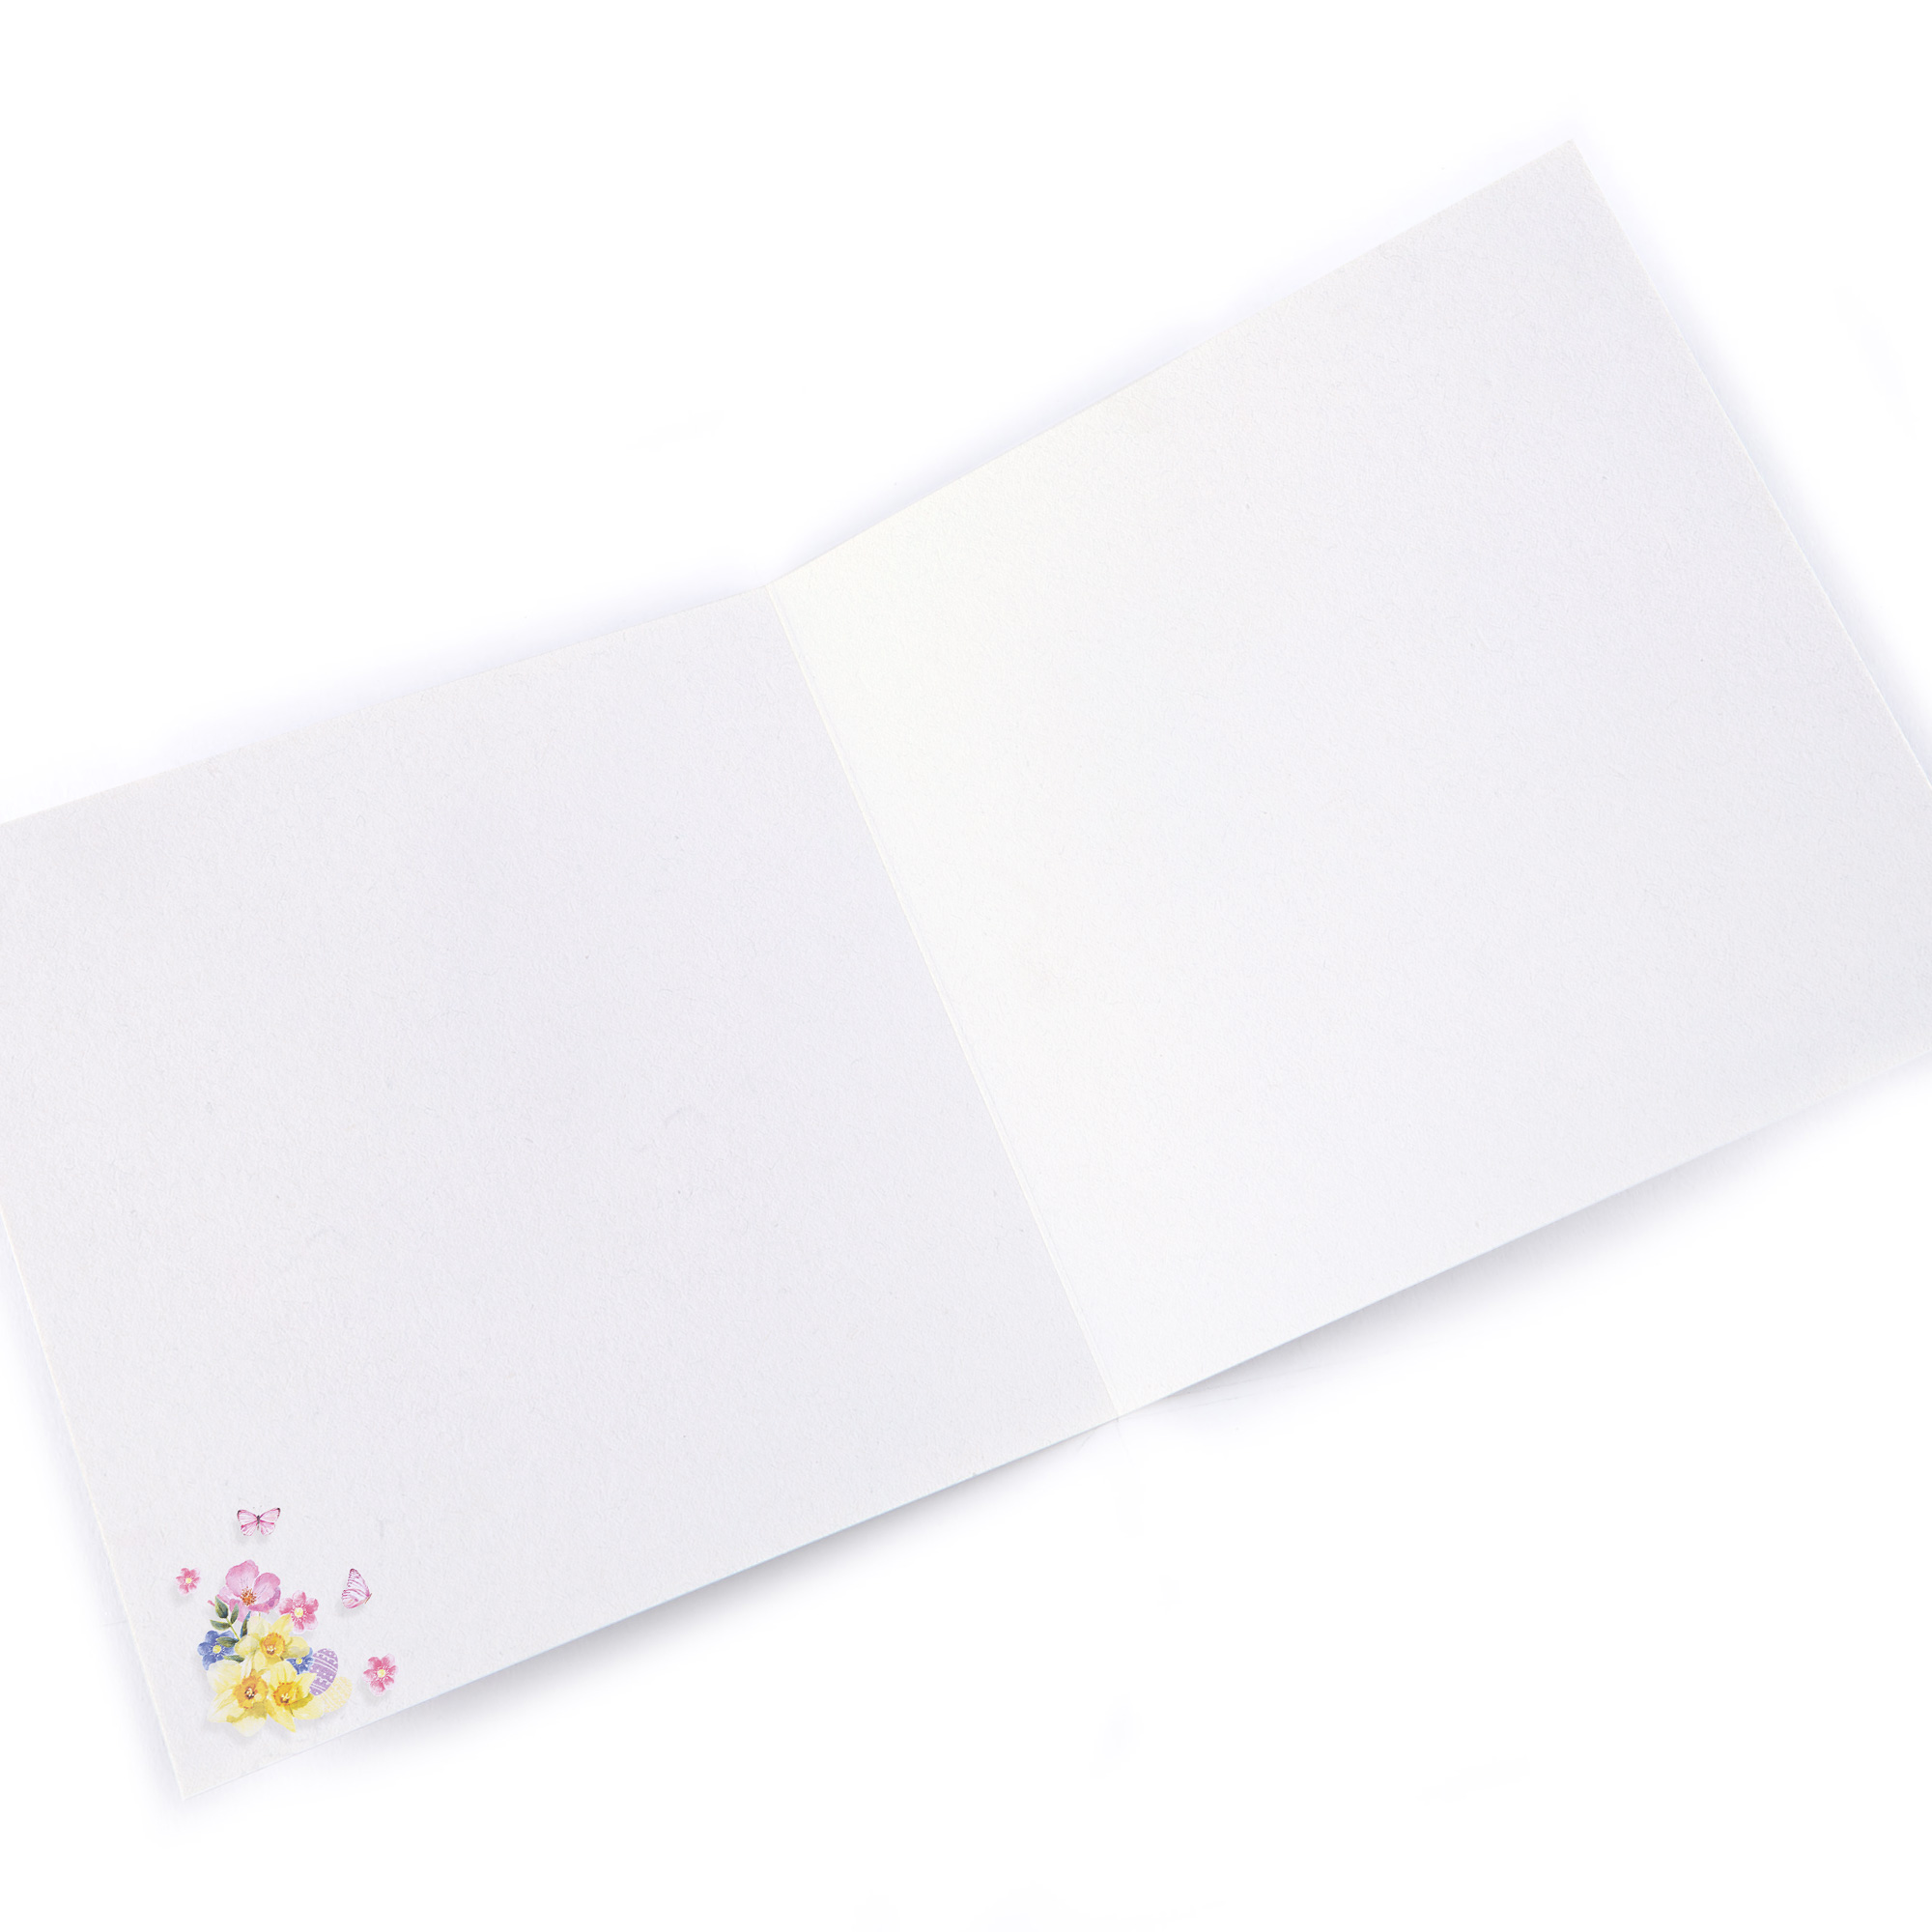 Photo Card - Floral Frame